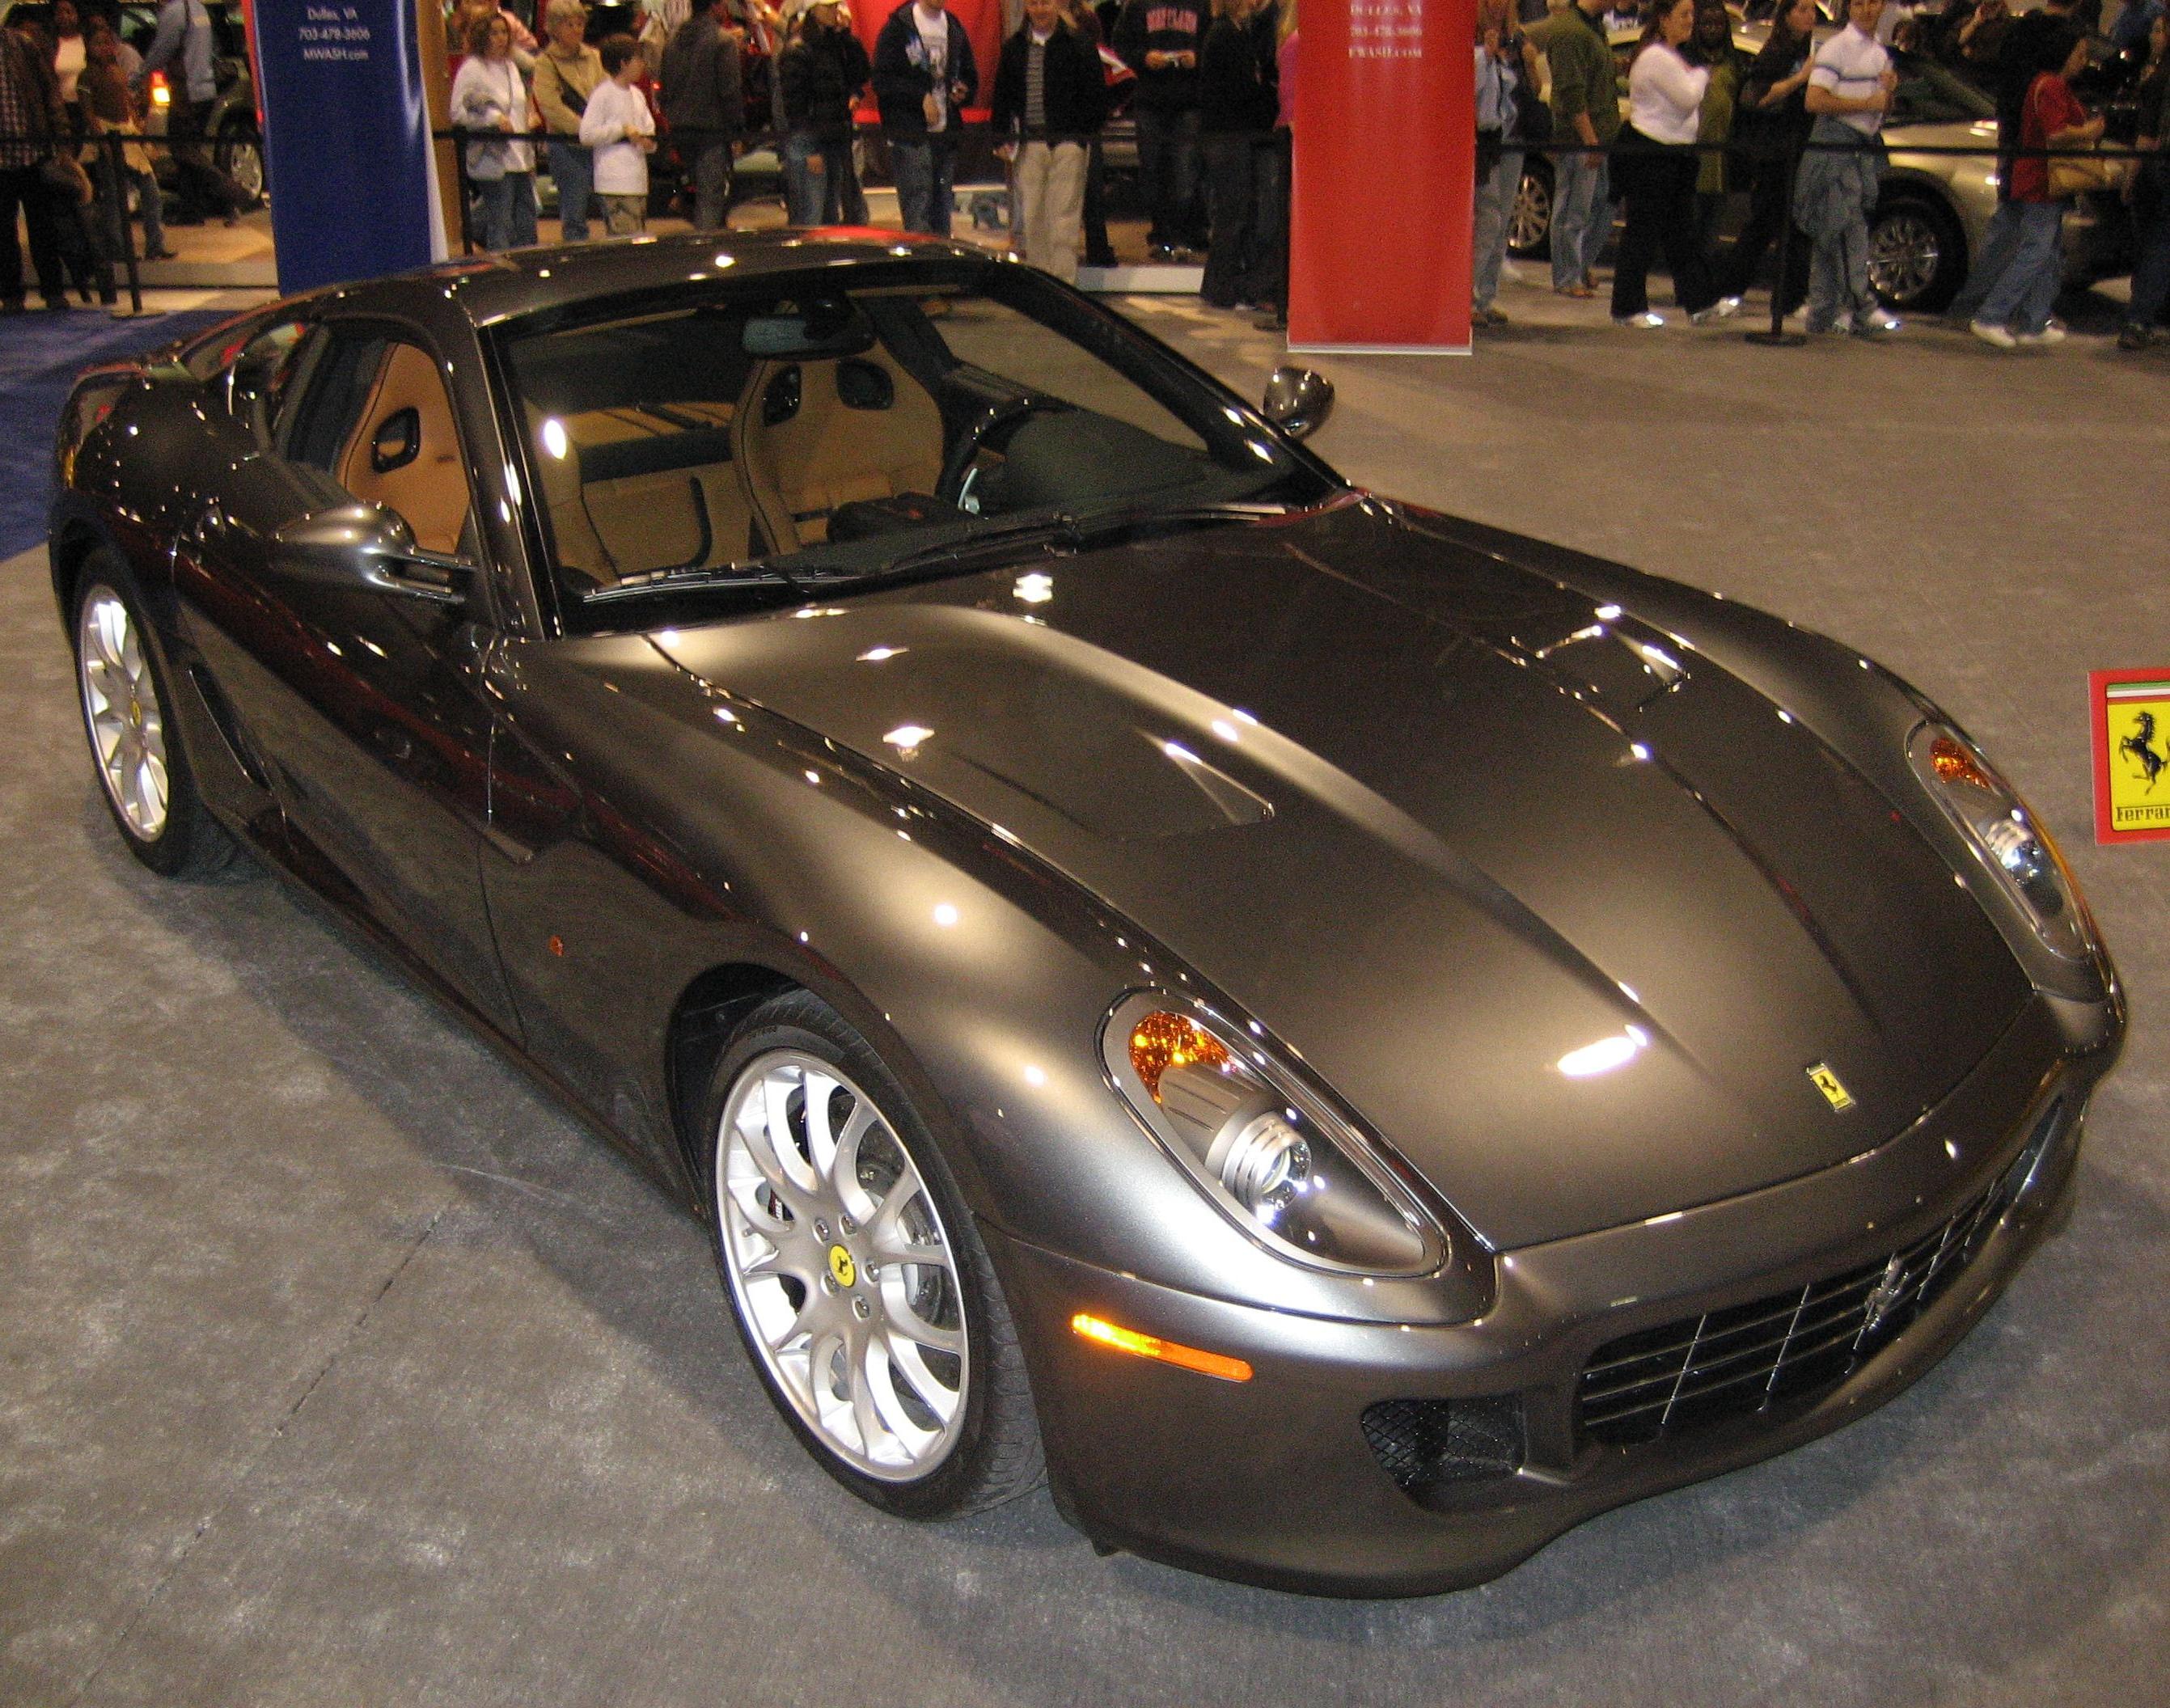 http://upload.wikimedia.org/wikipedia/commons/3/32/Ferrari_599.JPG